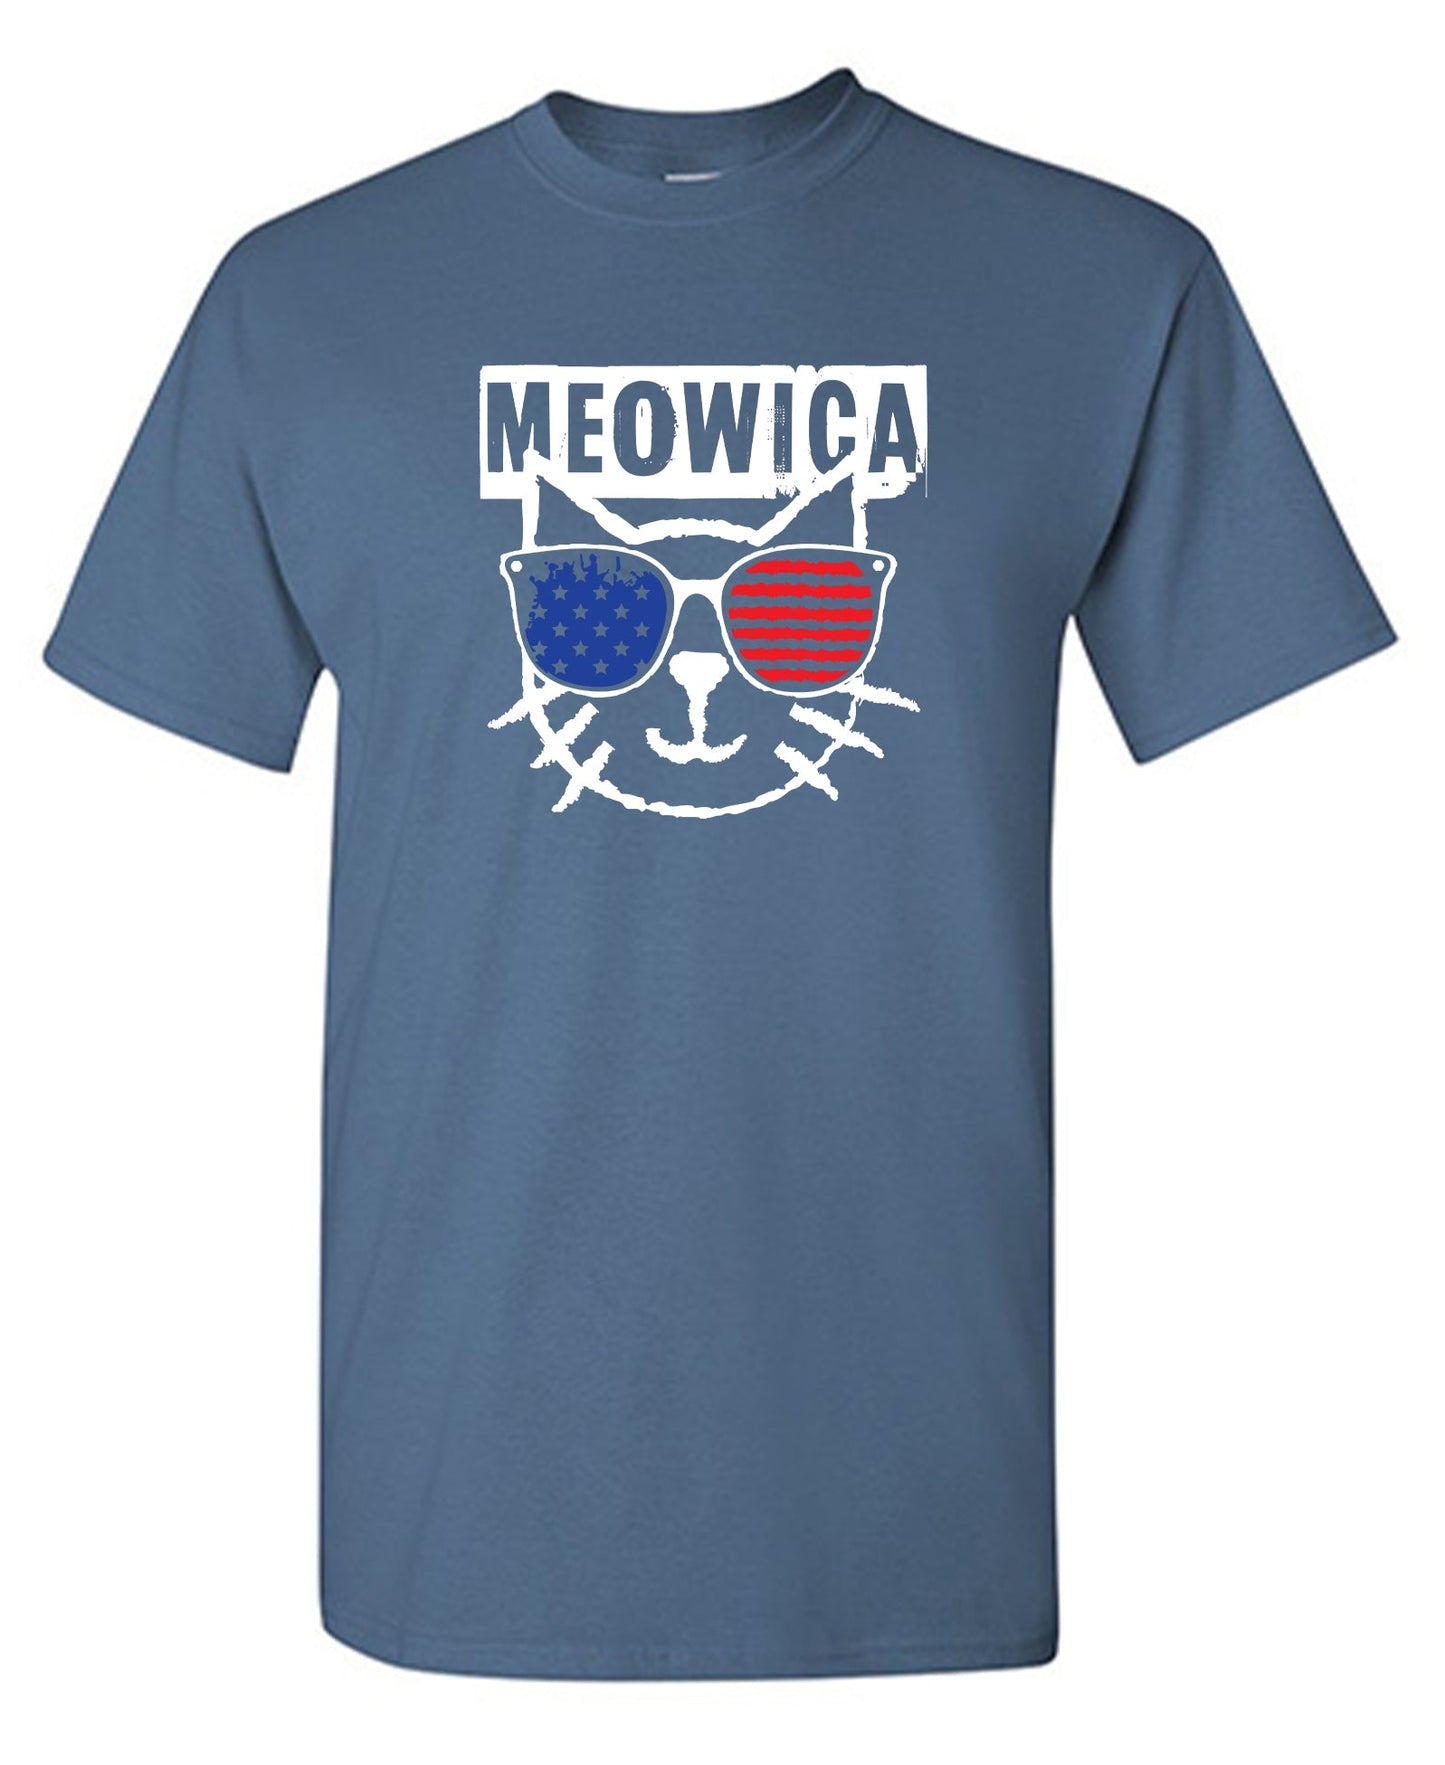 Meowica,  4th of July Shirt